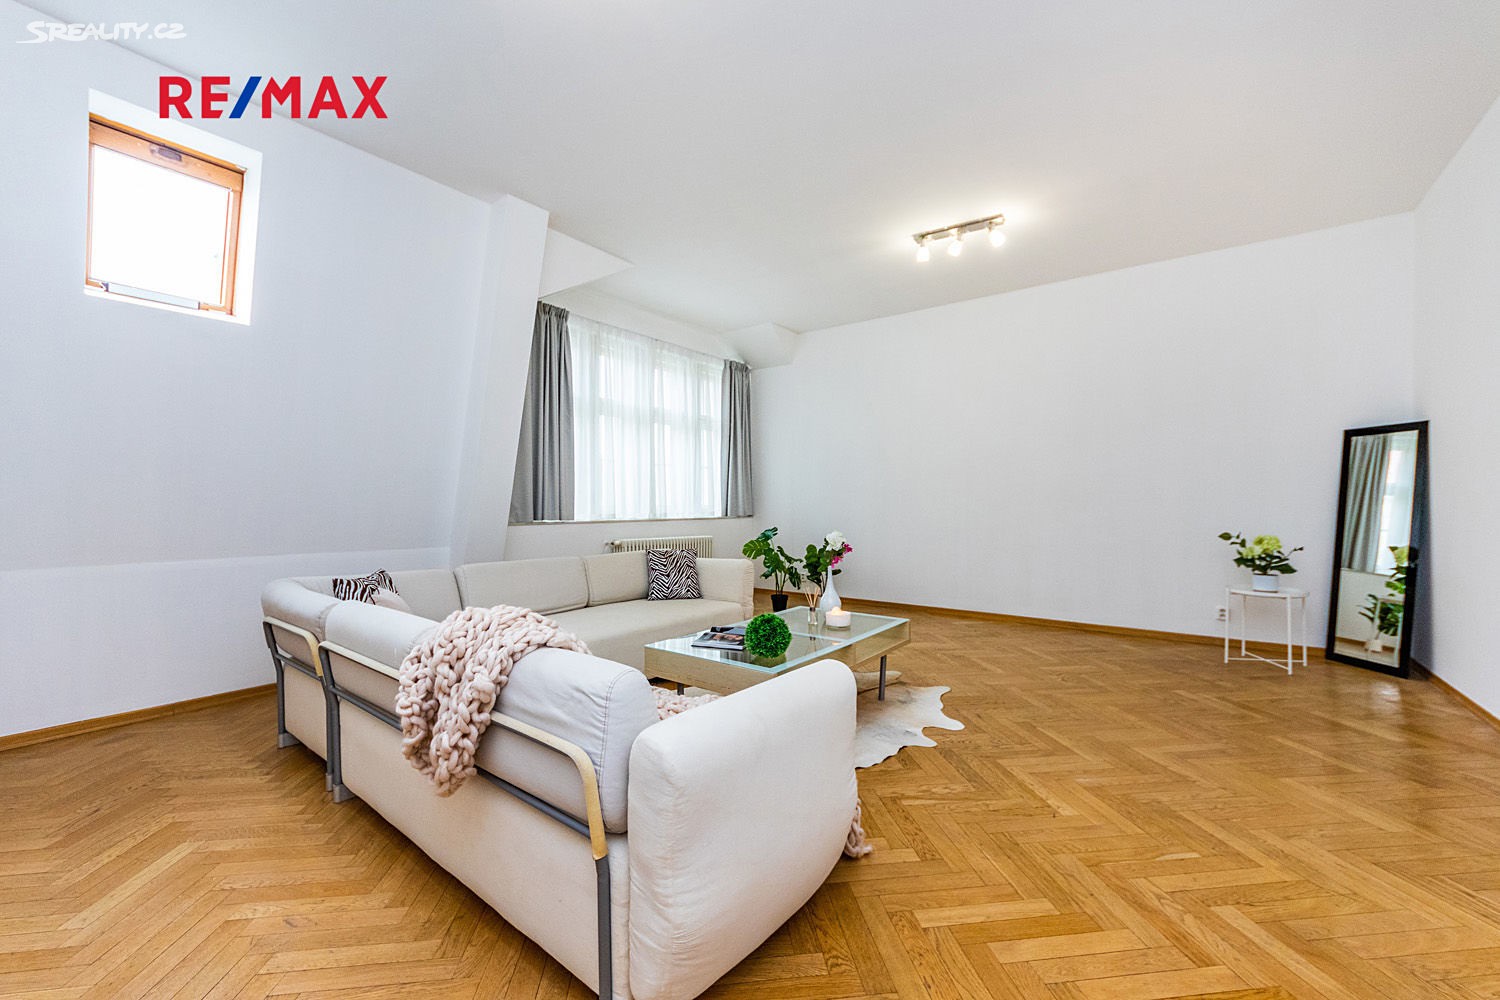 Prodej bytu 3+1 109 m² (Mezonet), Valentinská, Praha 1 - Josefov